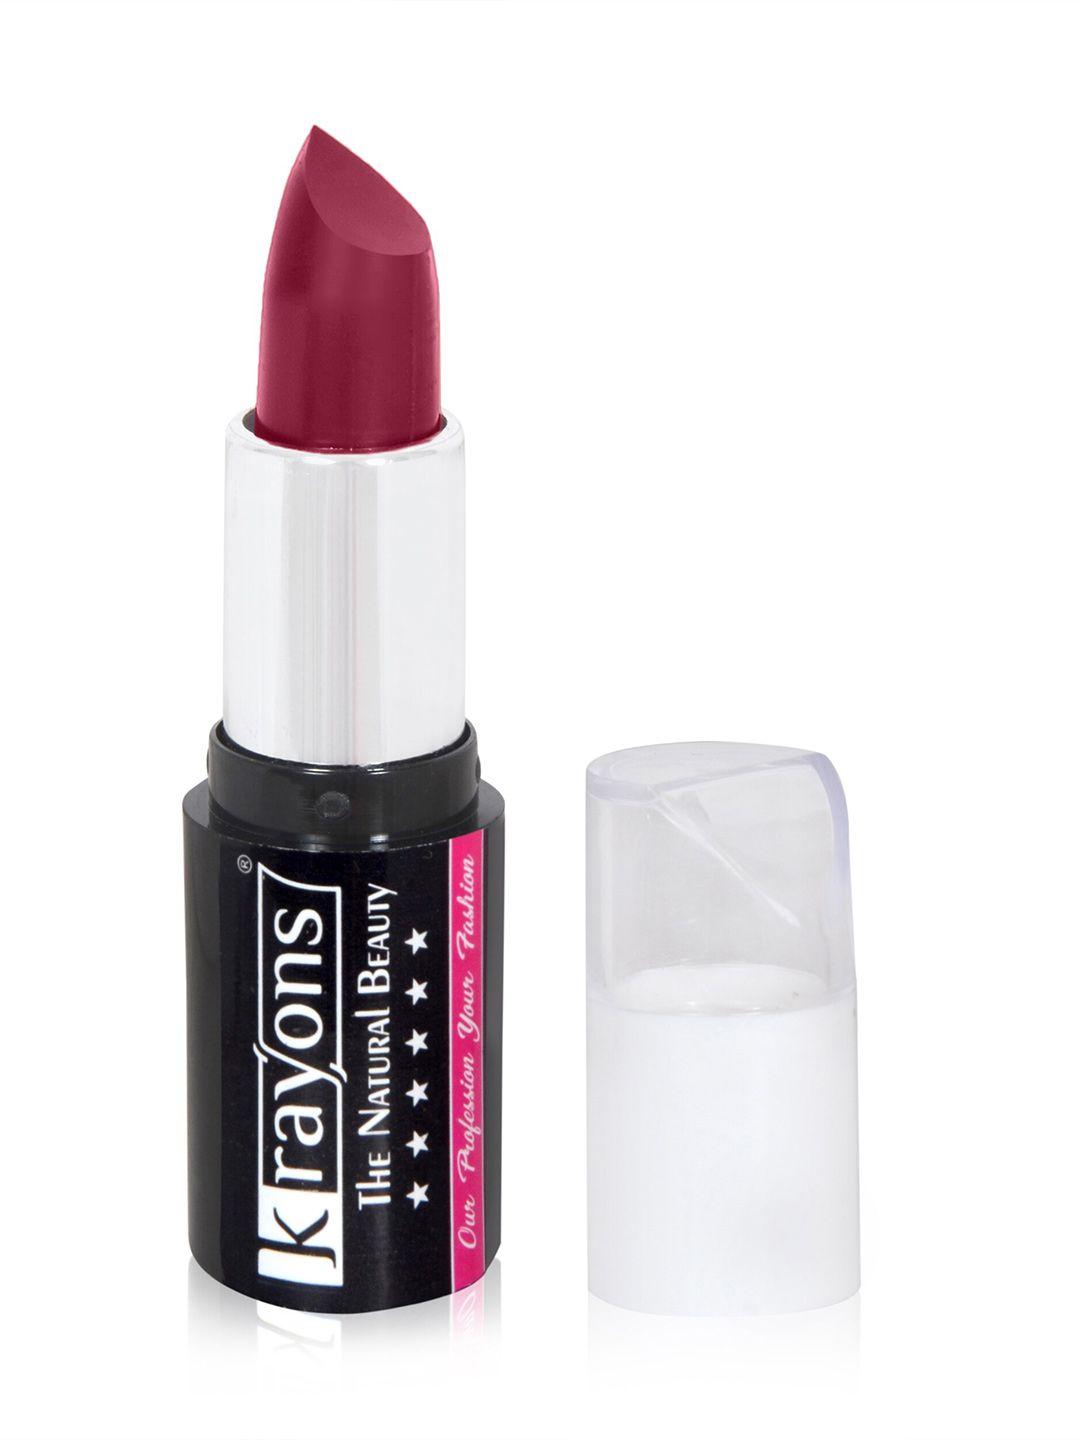 krayons set of 2 moisturizing matte waterproof & long-lasting lipstick 4 g each-rust pink 06 - plum pink 11